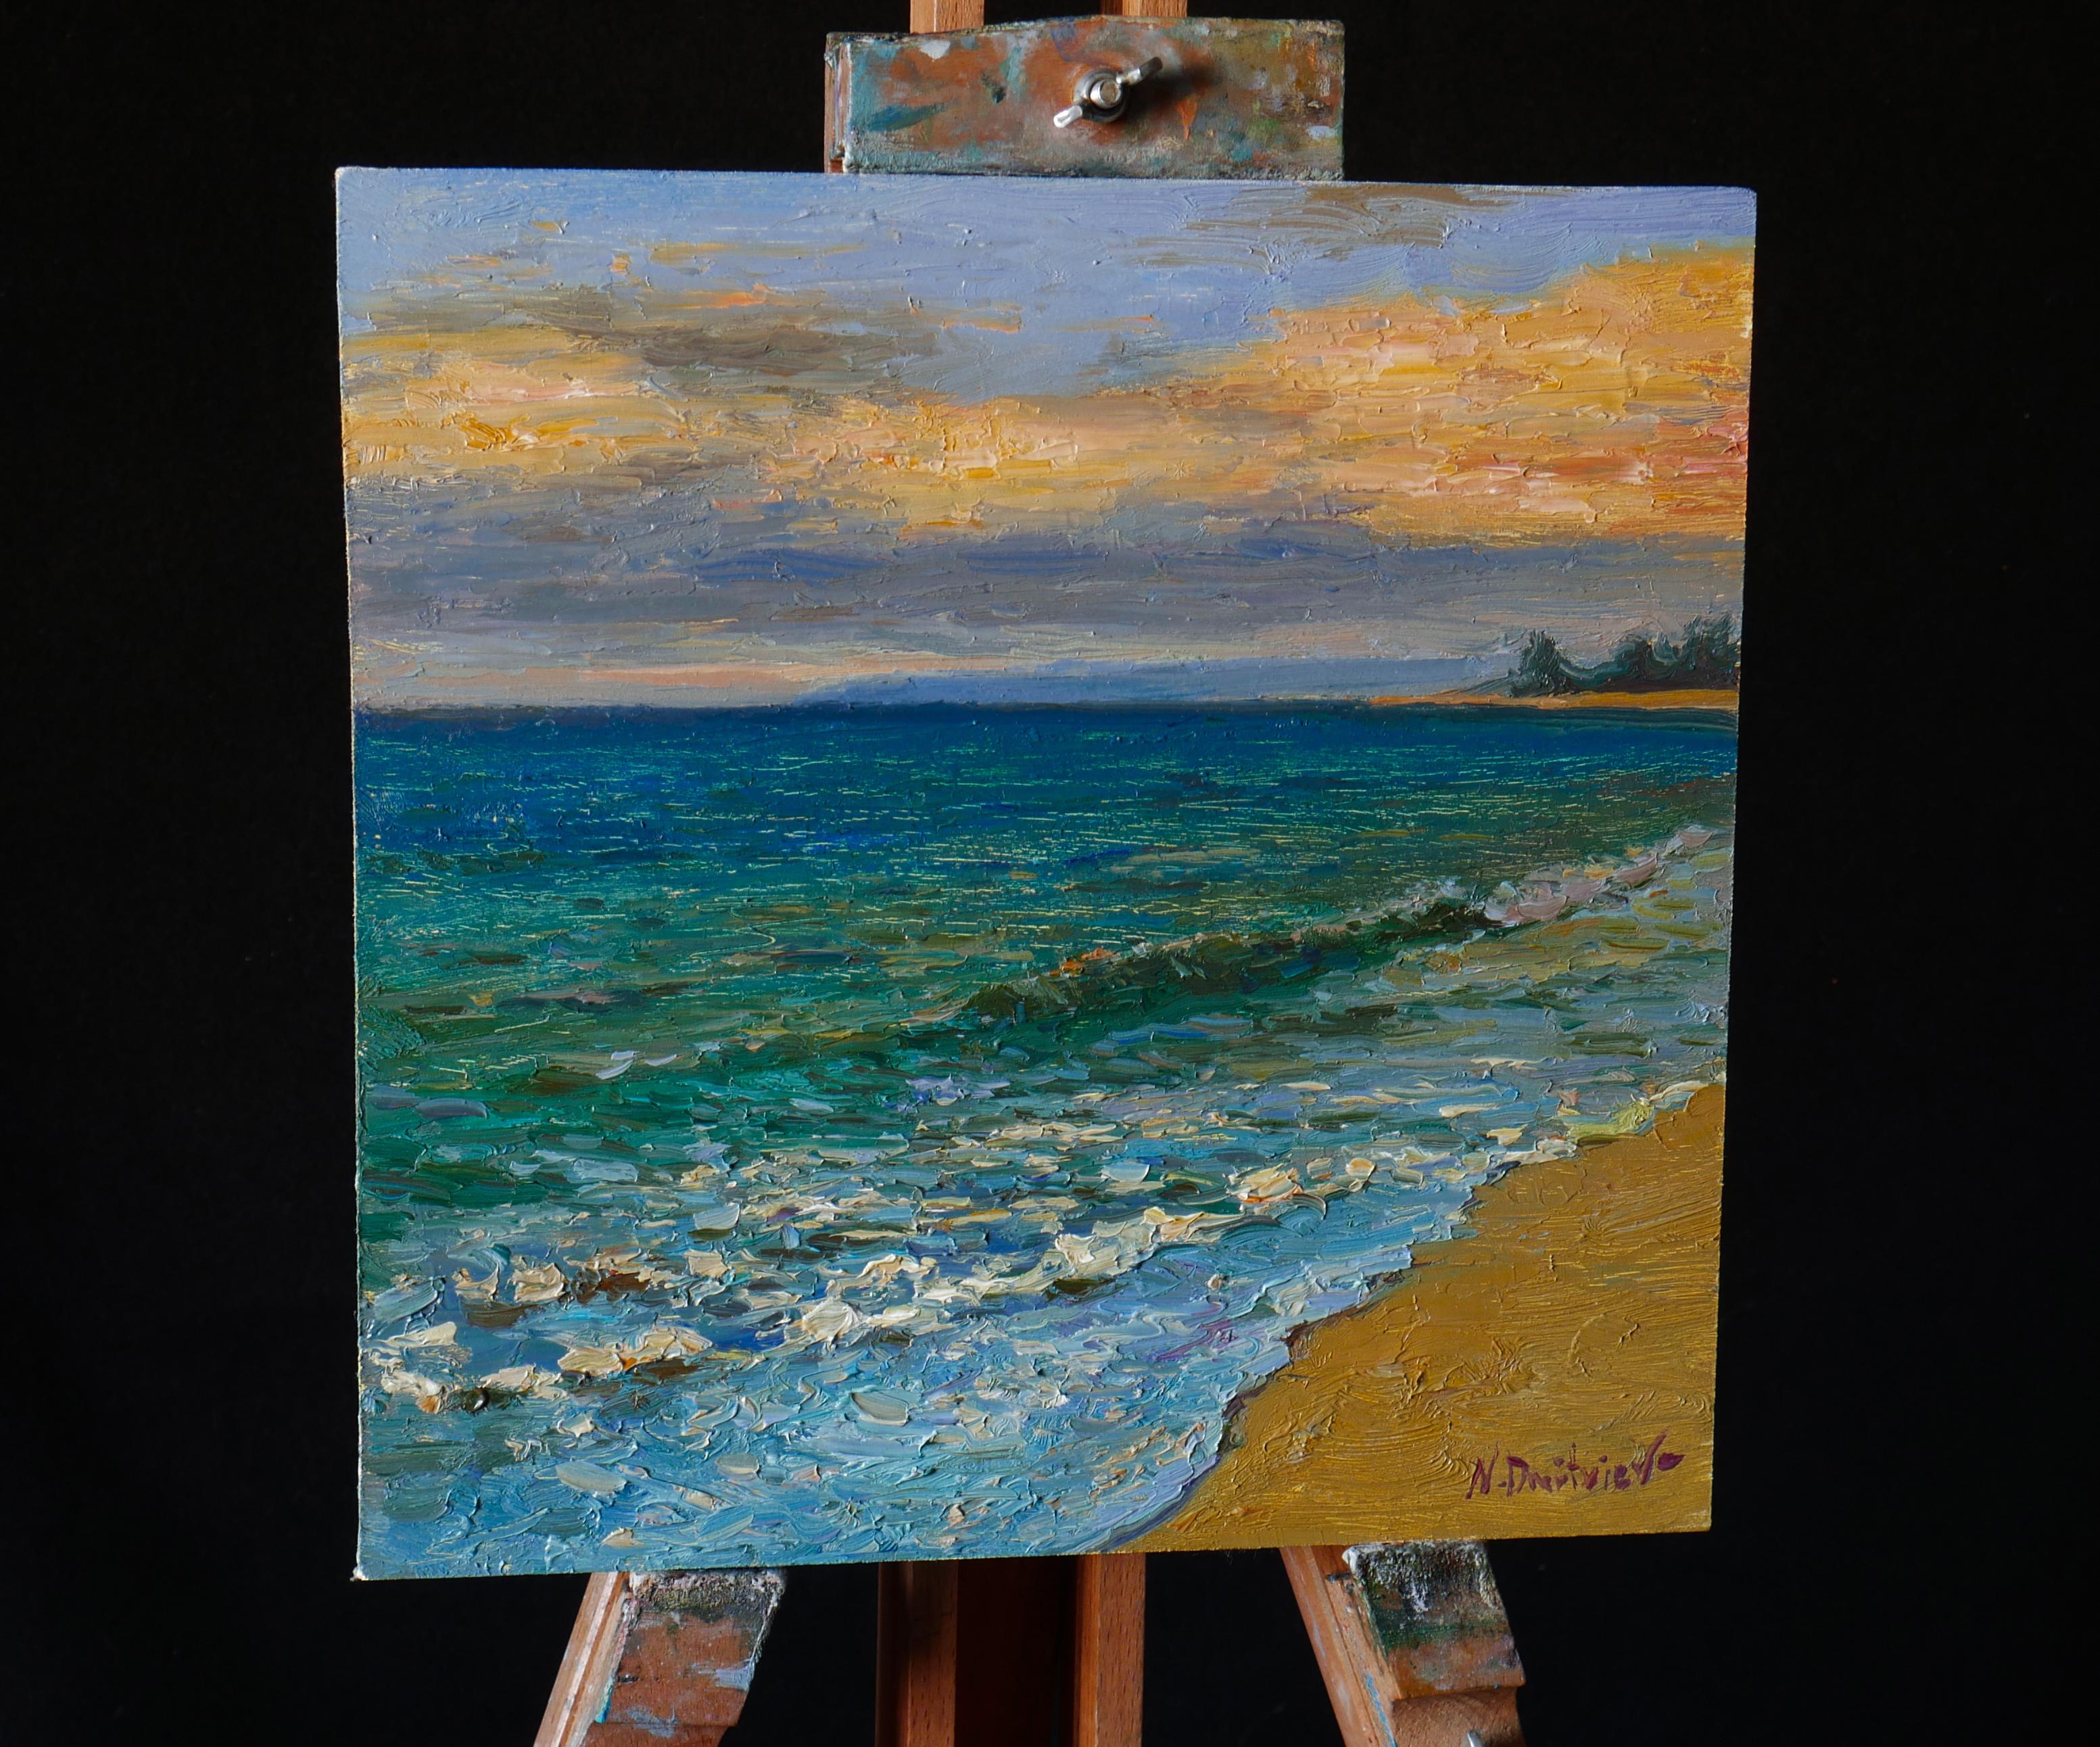 The Black Sea - summer seascape painting - Painting by Nikolay Dmitriev